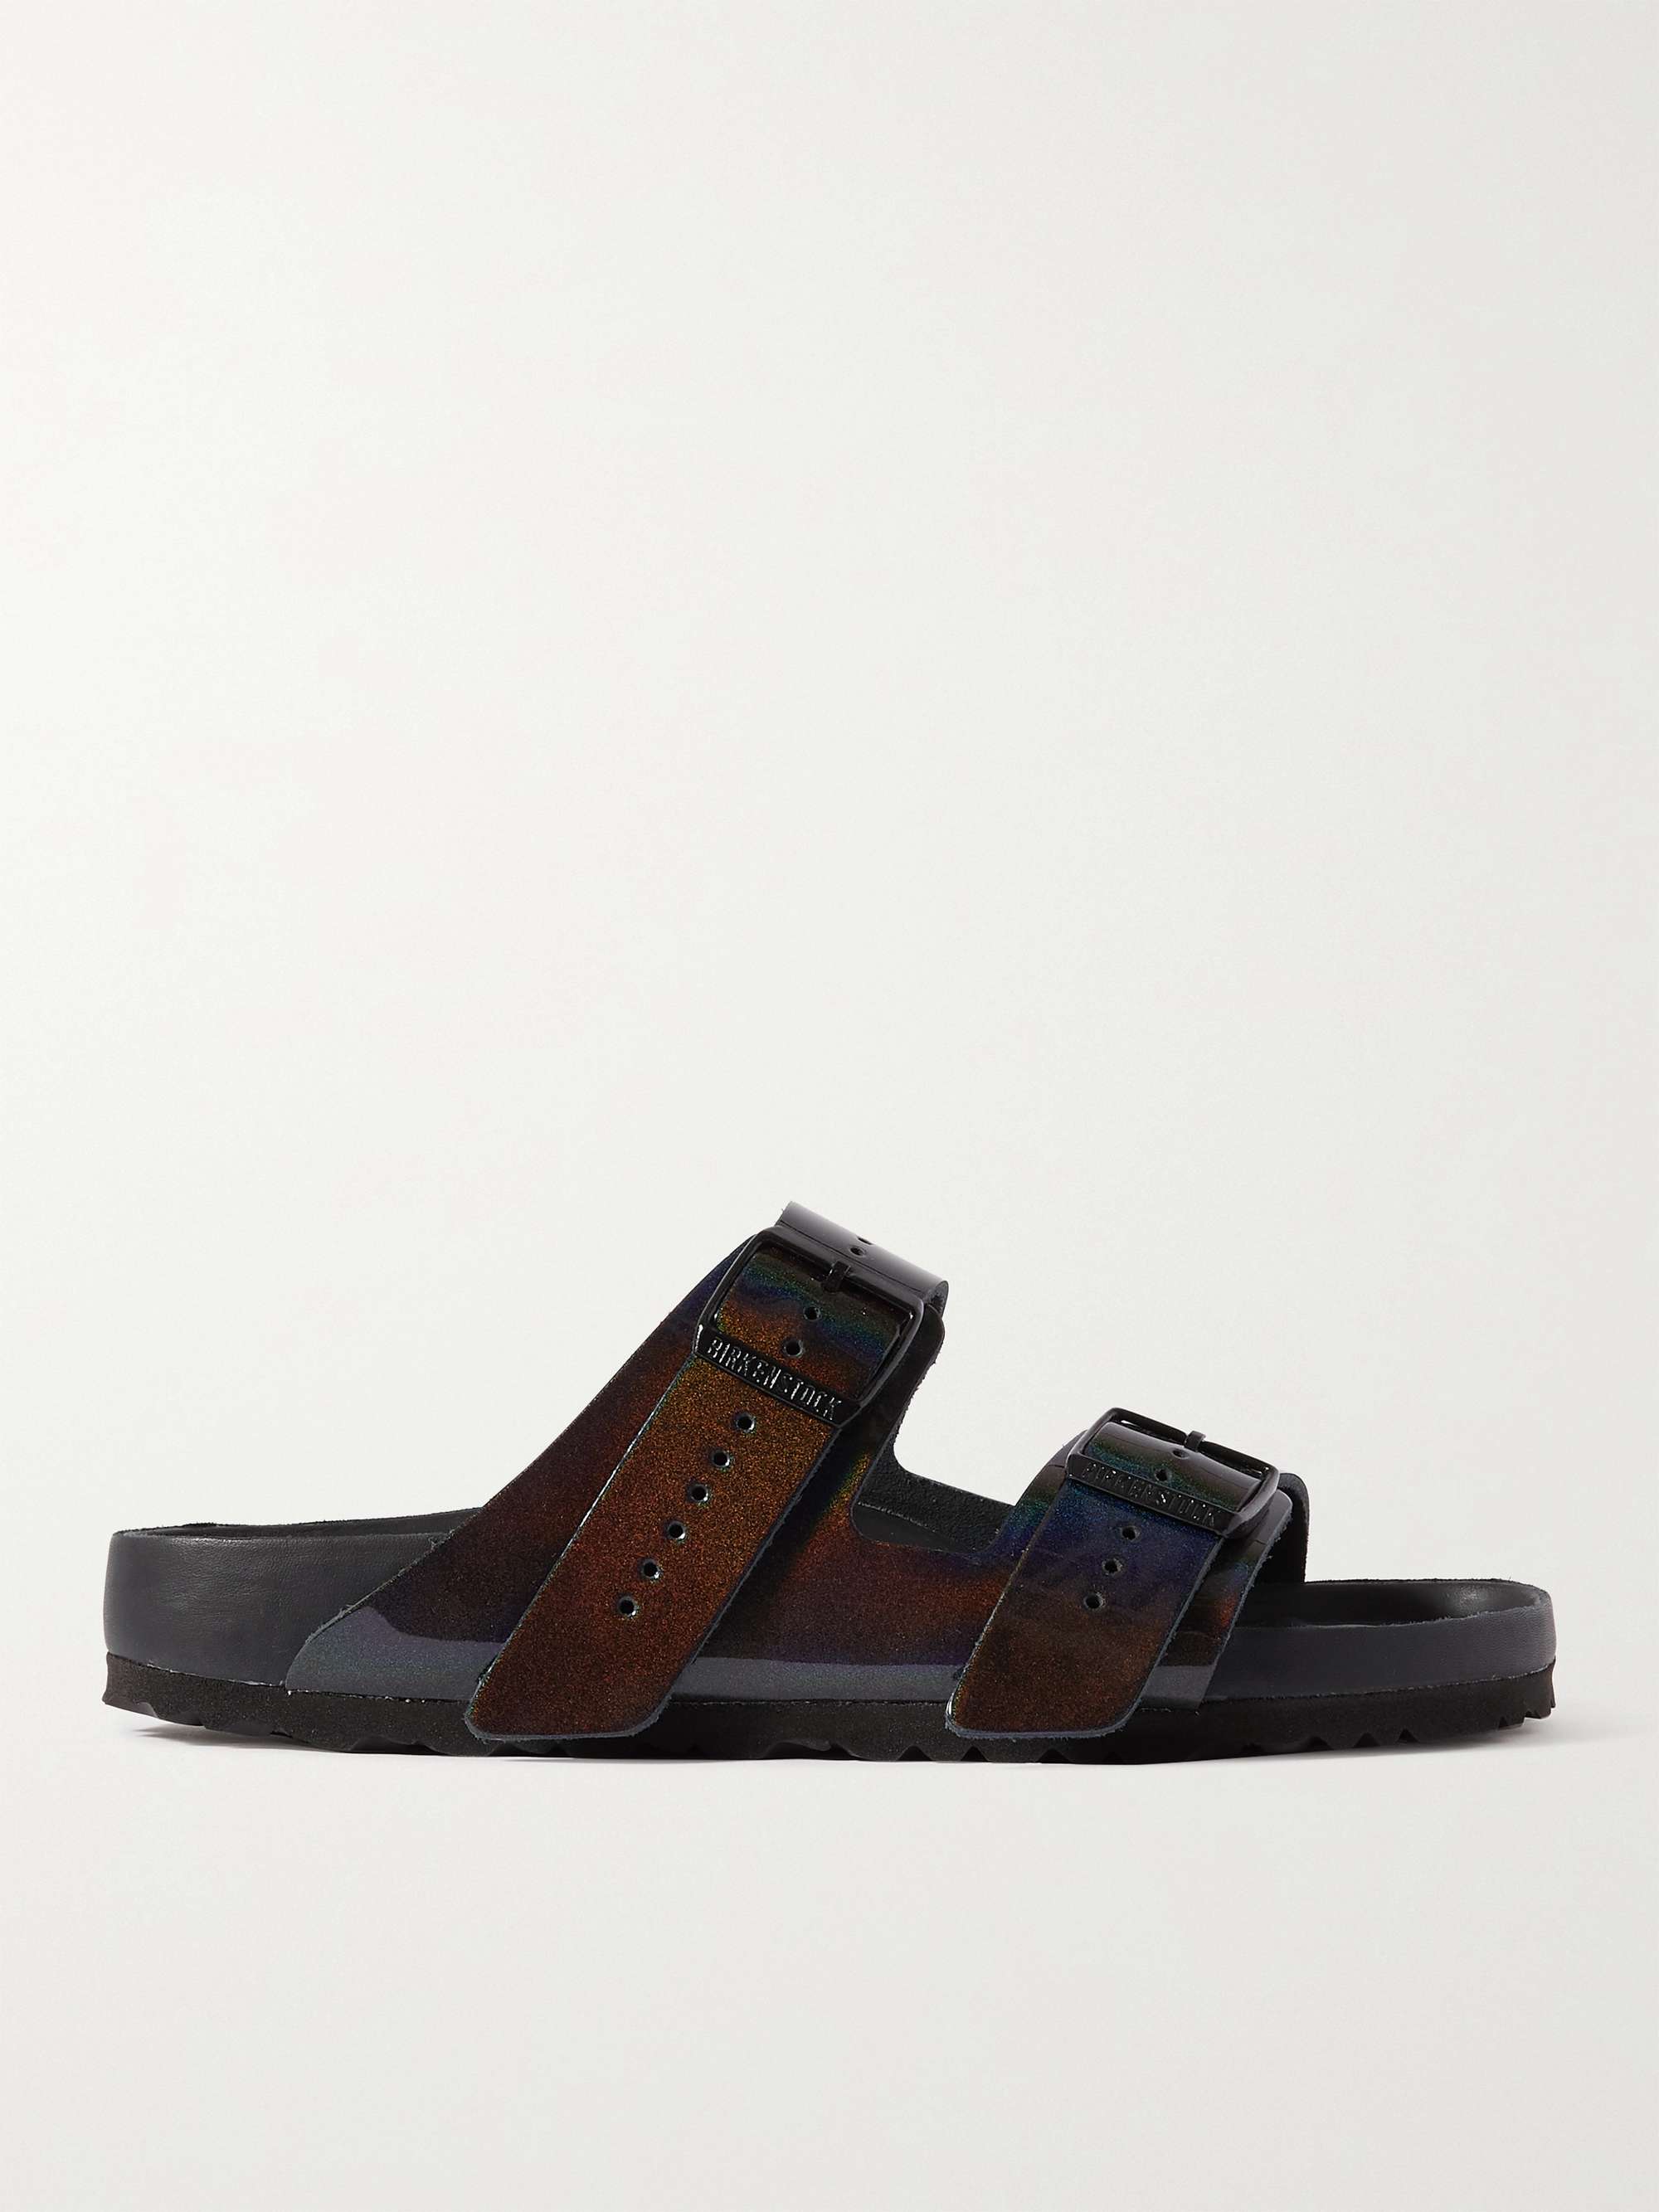 RICK OWENS + Birkenstock Arizona Iridescent Leather Sandals